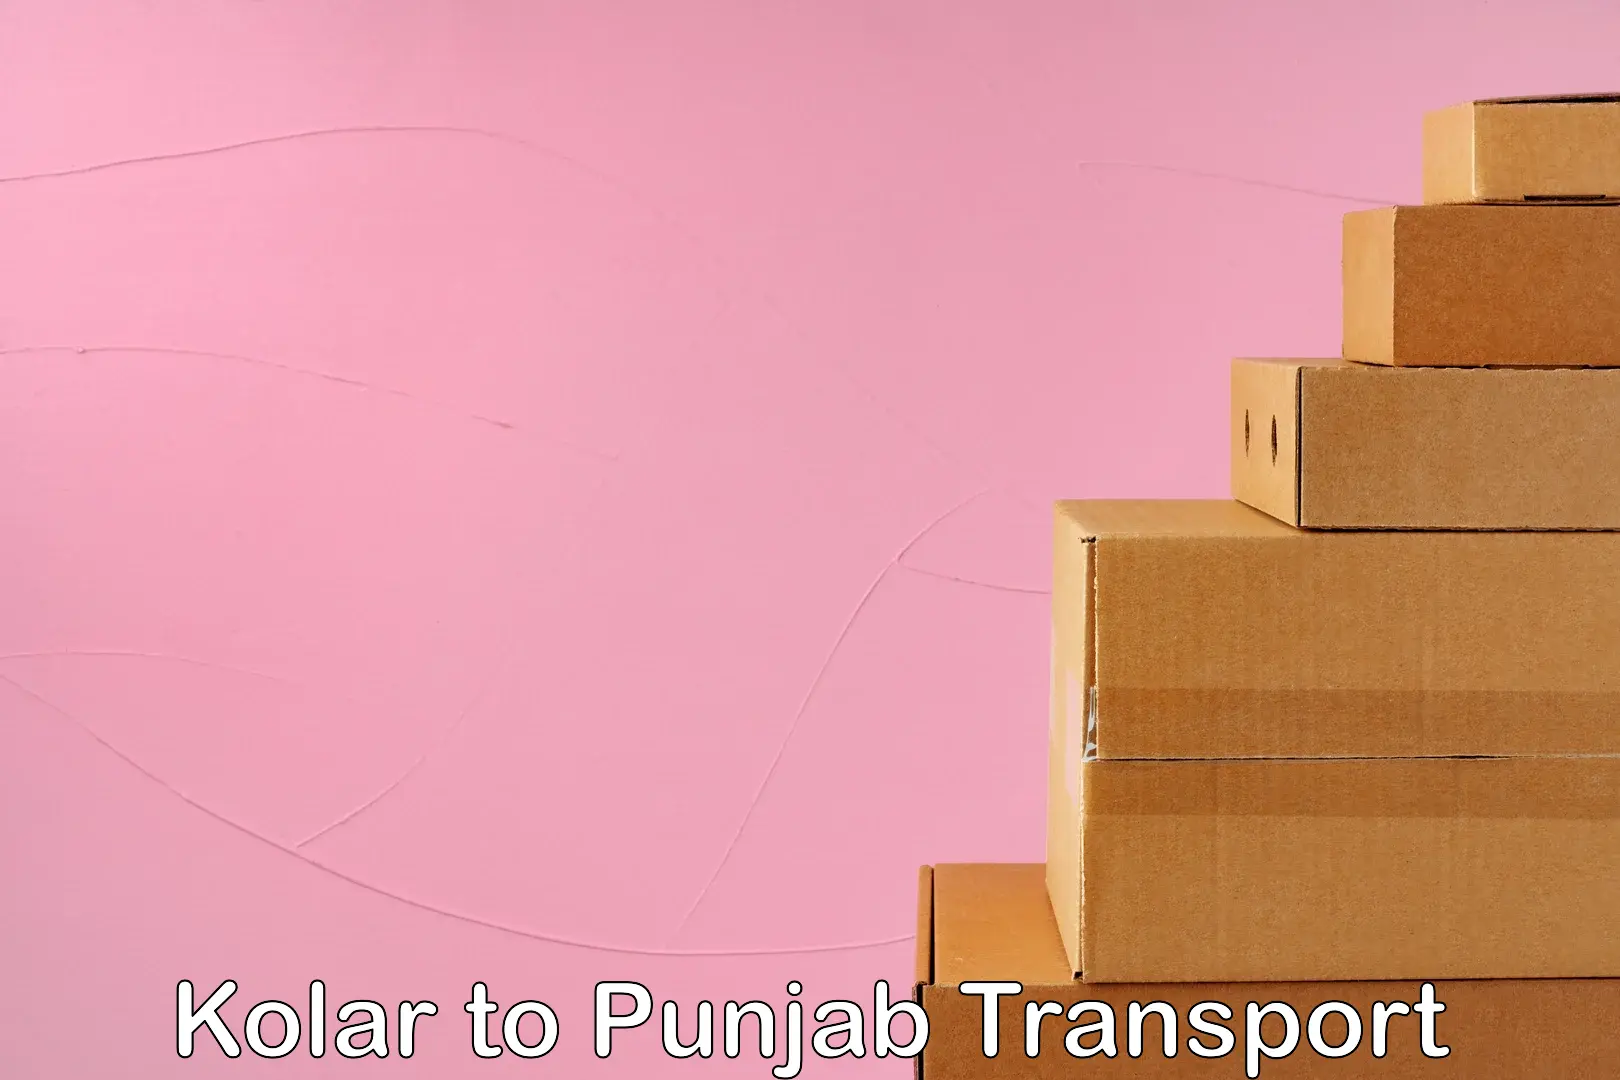 Daily transport service Kolar to Punjab